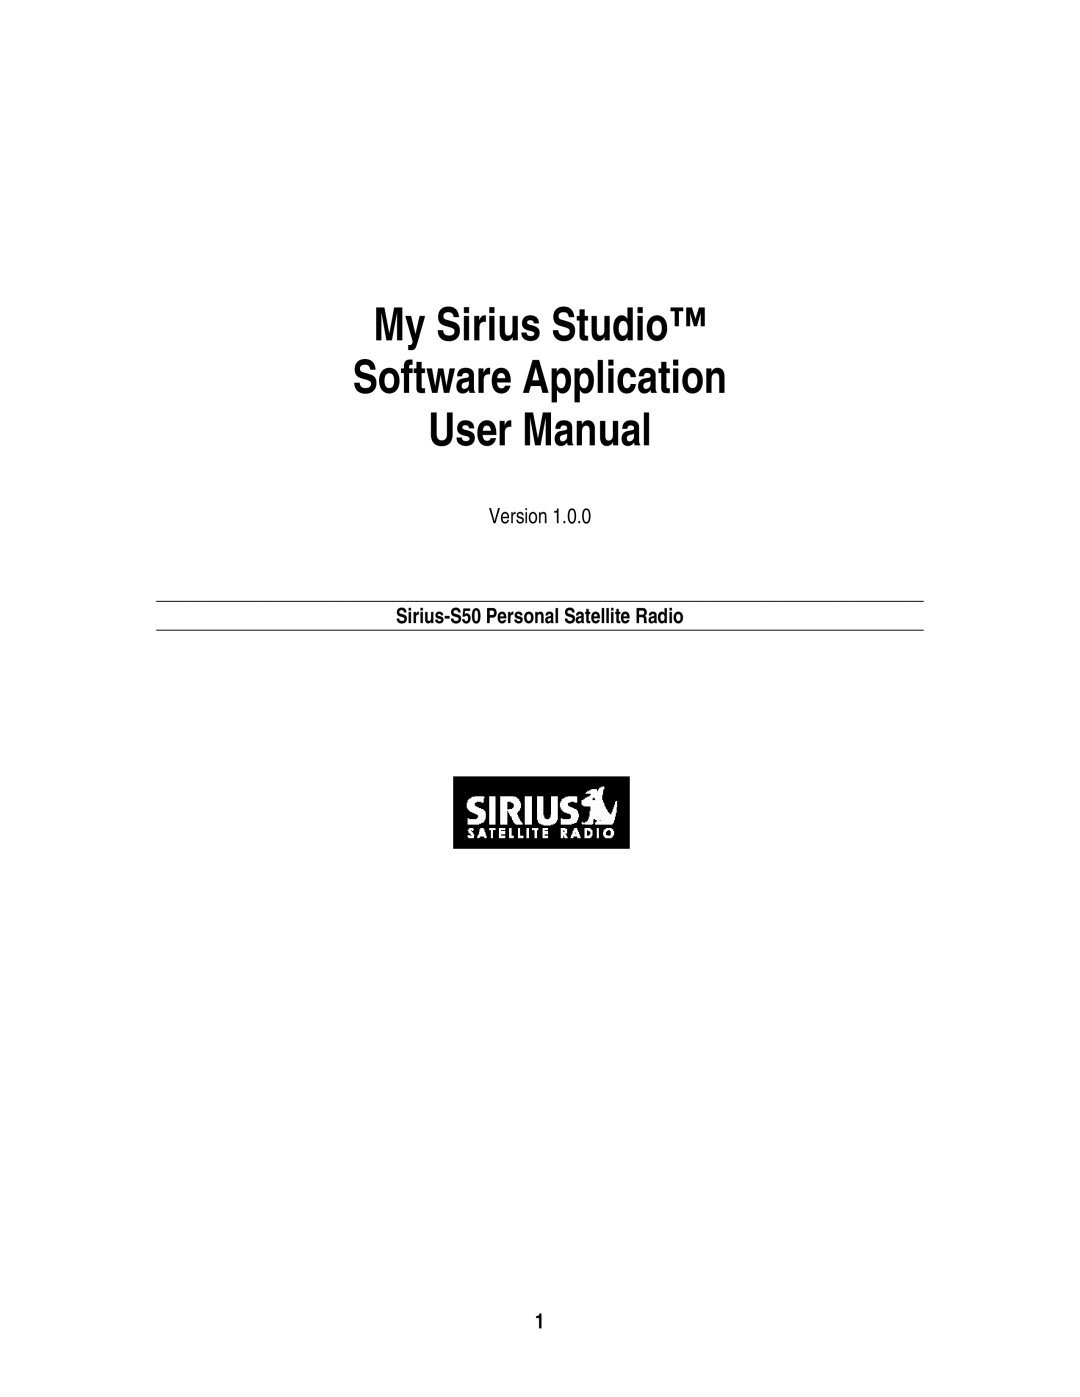 Sirius Satellite Radio S50 user manual My Sirius Studio Software Application 